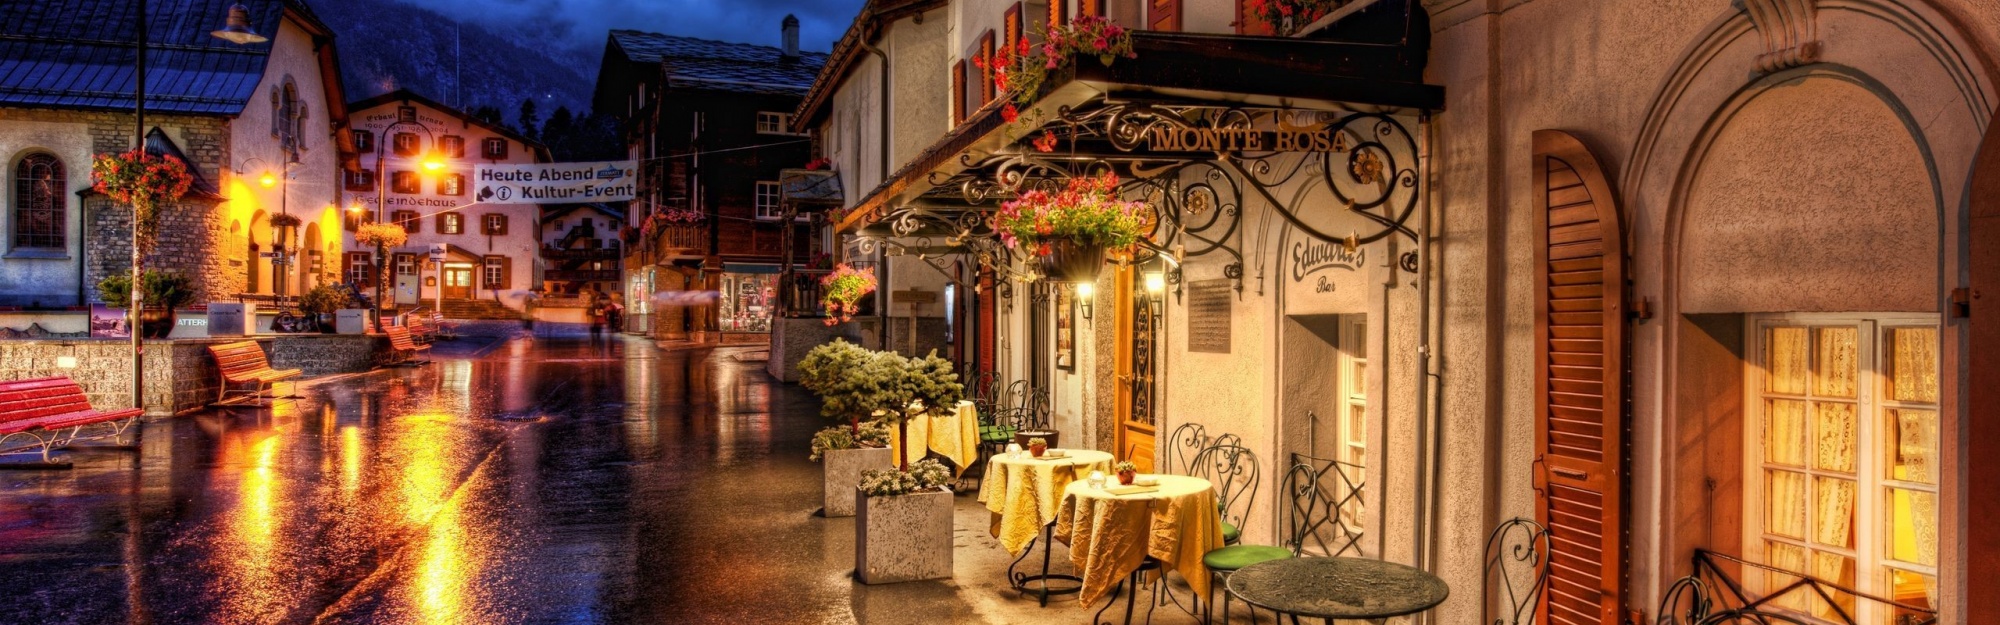 Cafes Coffee Tables Streets Zermatt Switzerland Roads Buildings Houses City